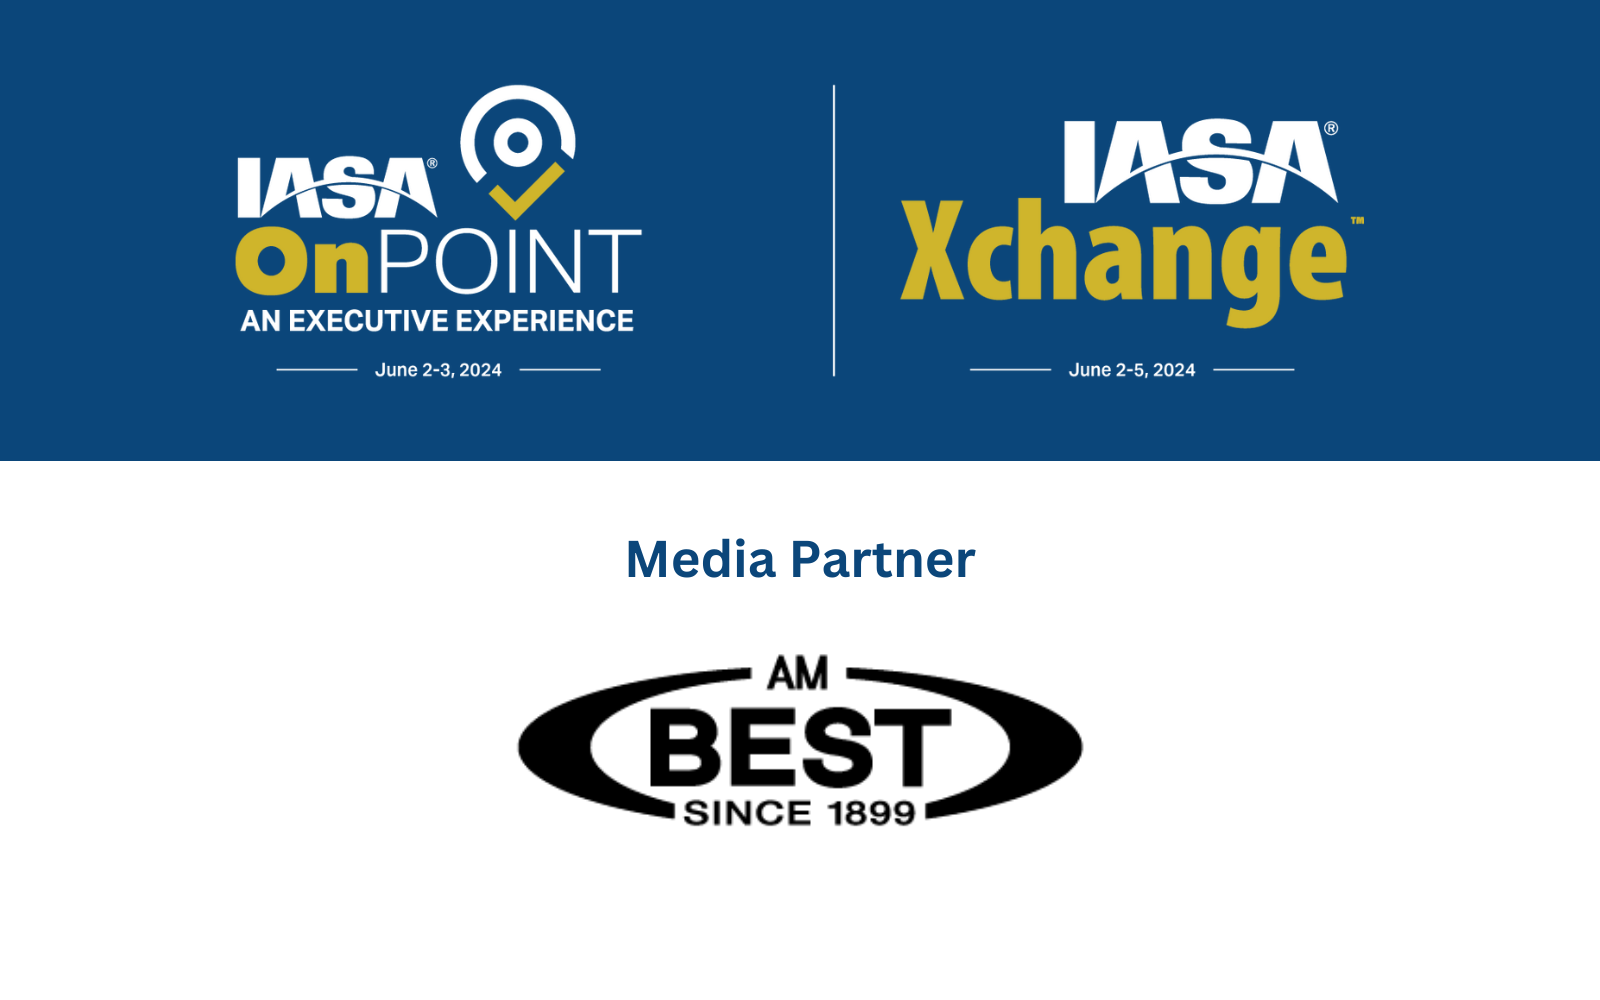 IASA Secures Media Partnership with AM Best